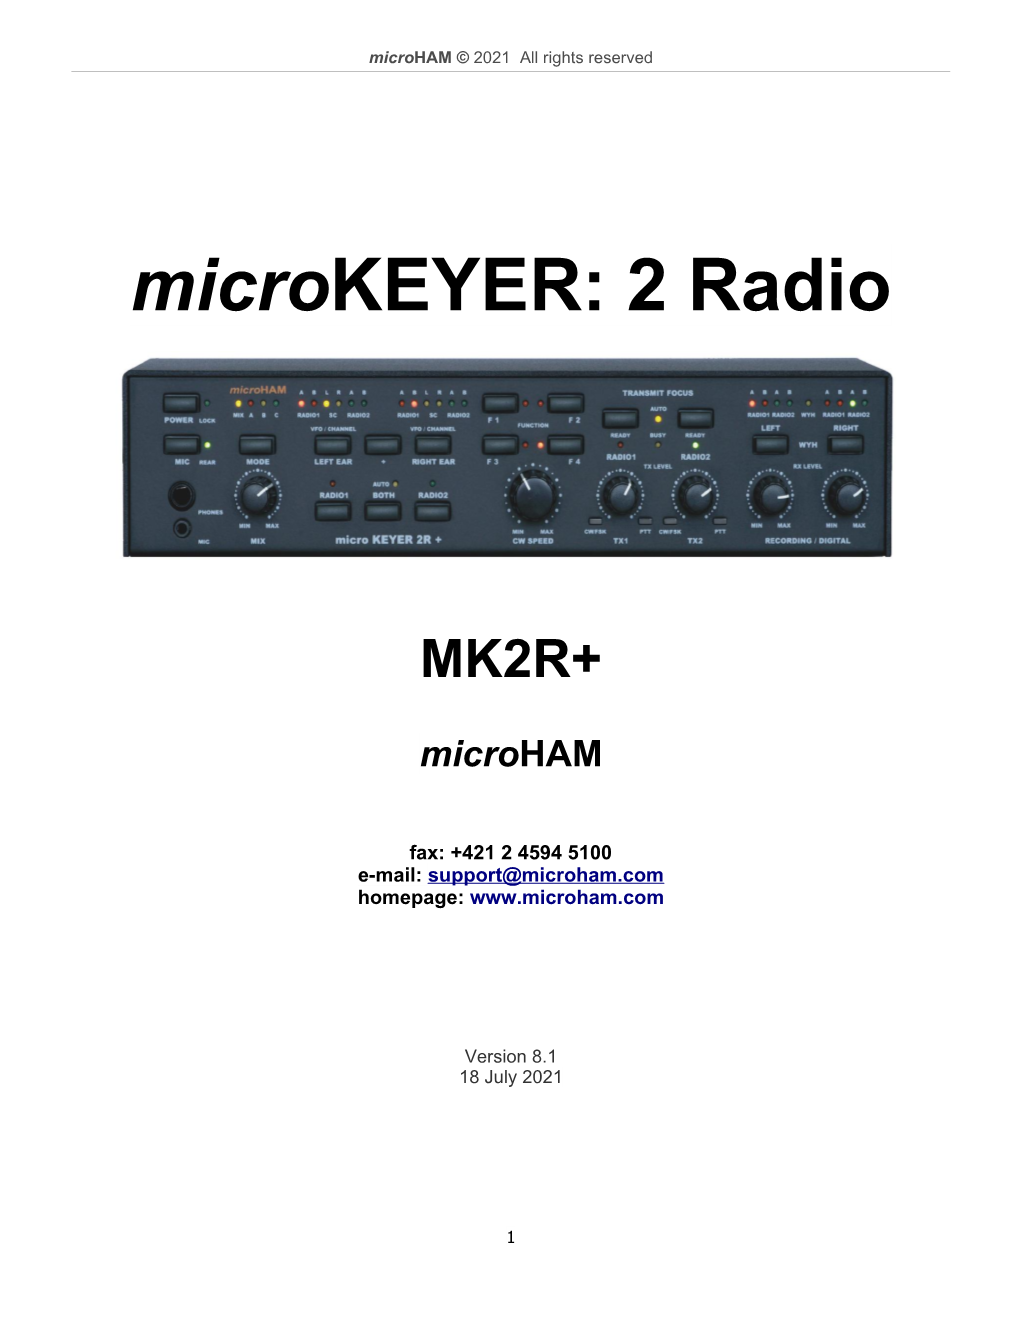 Microkeyer: 2 Radio